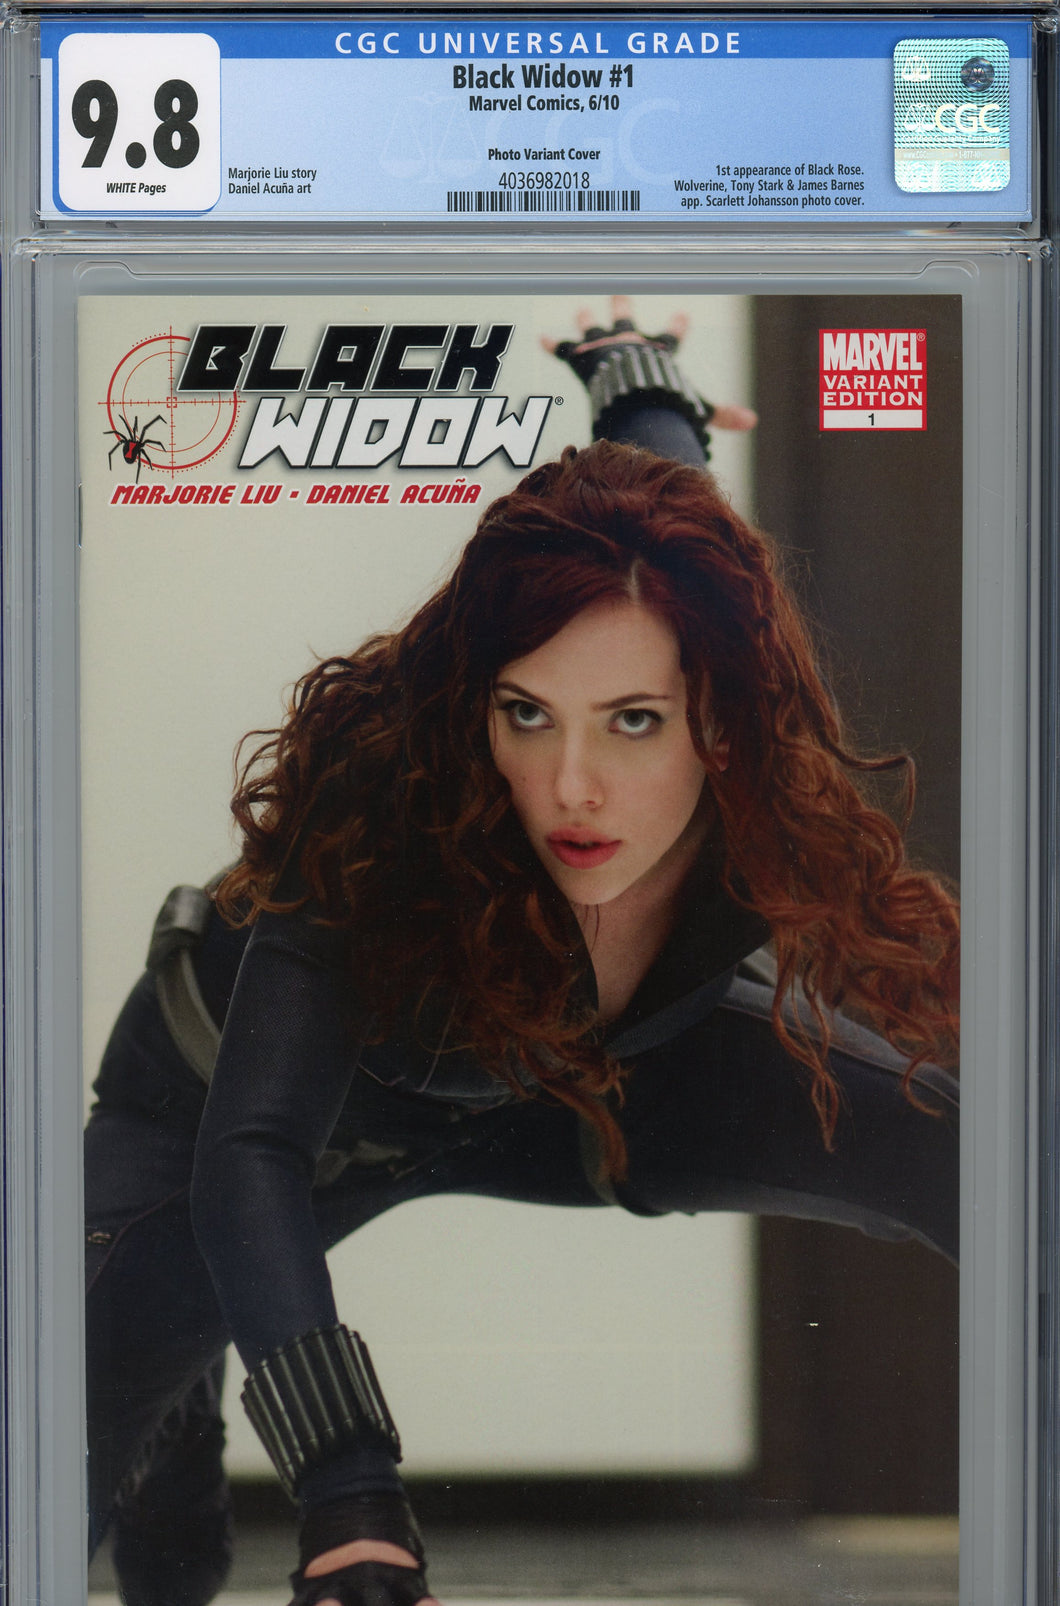 2010 Black Widow #1 CGC 9.8 Photo Variant Cover